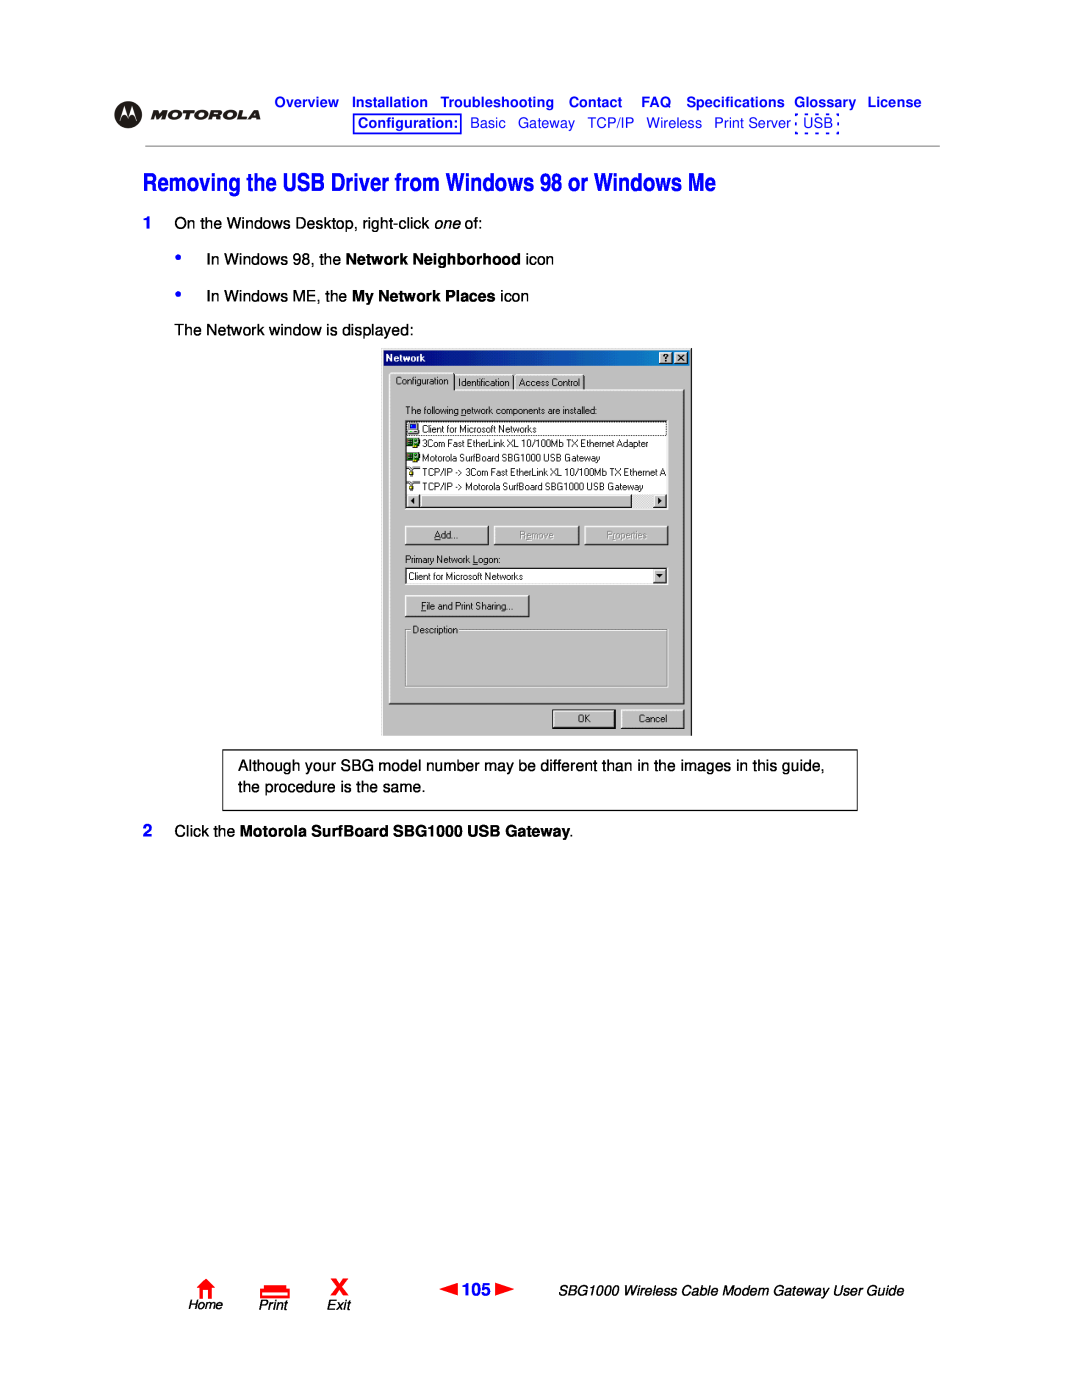 Motorola manual Removing the USB Driver from Windows 98 or Windows Me, Click the Motorola SurfBoard SBG1000 USB Gateway 